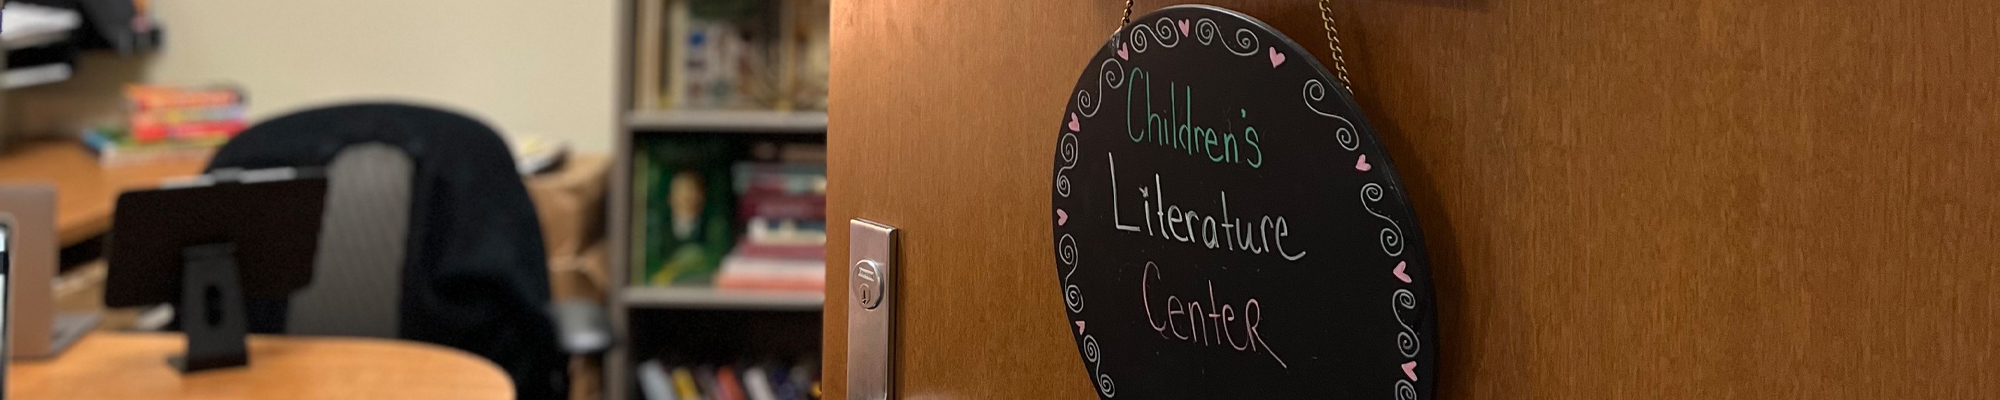 up close of Center door with sign Children's Literature Center